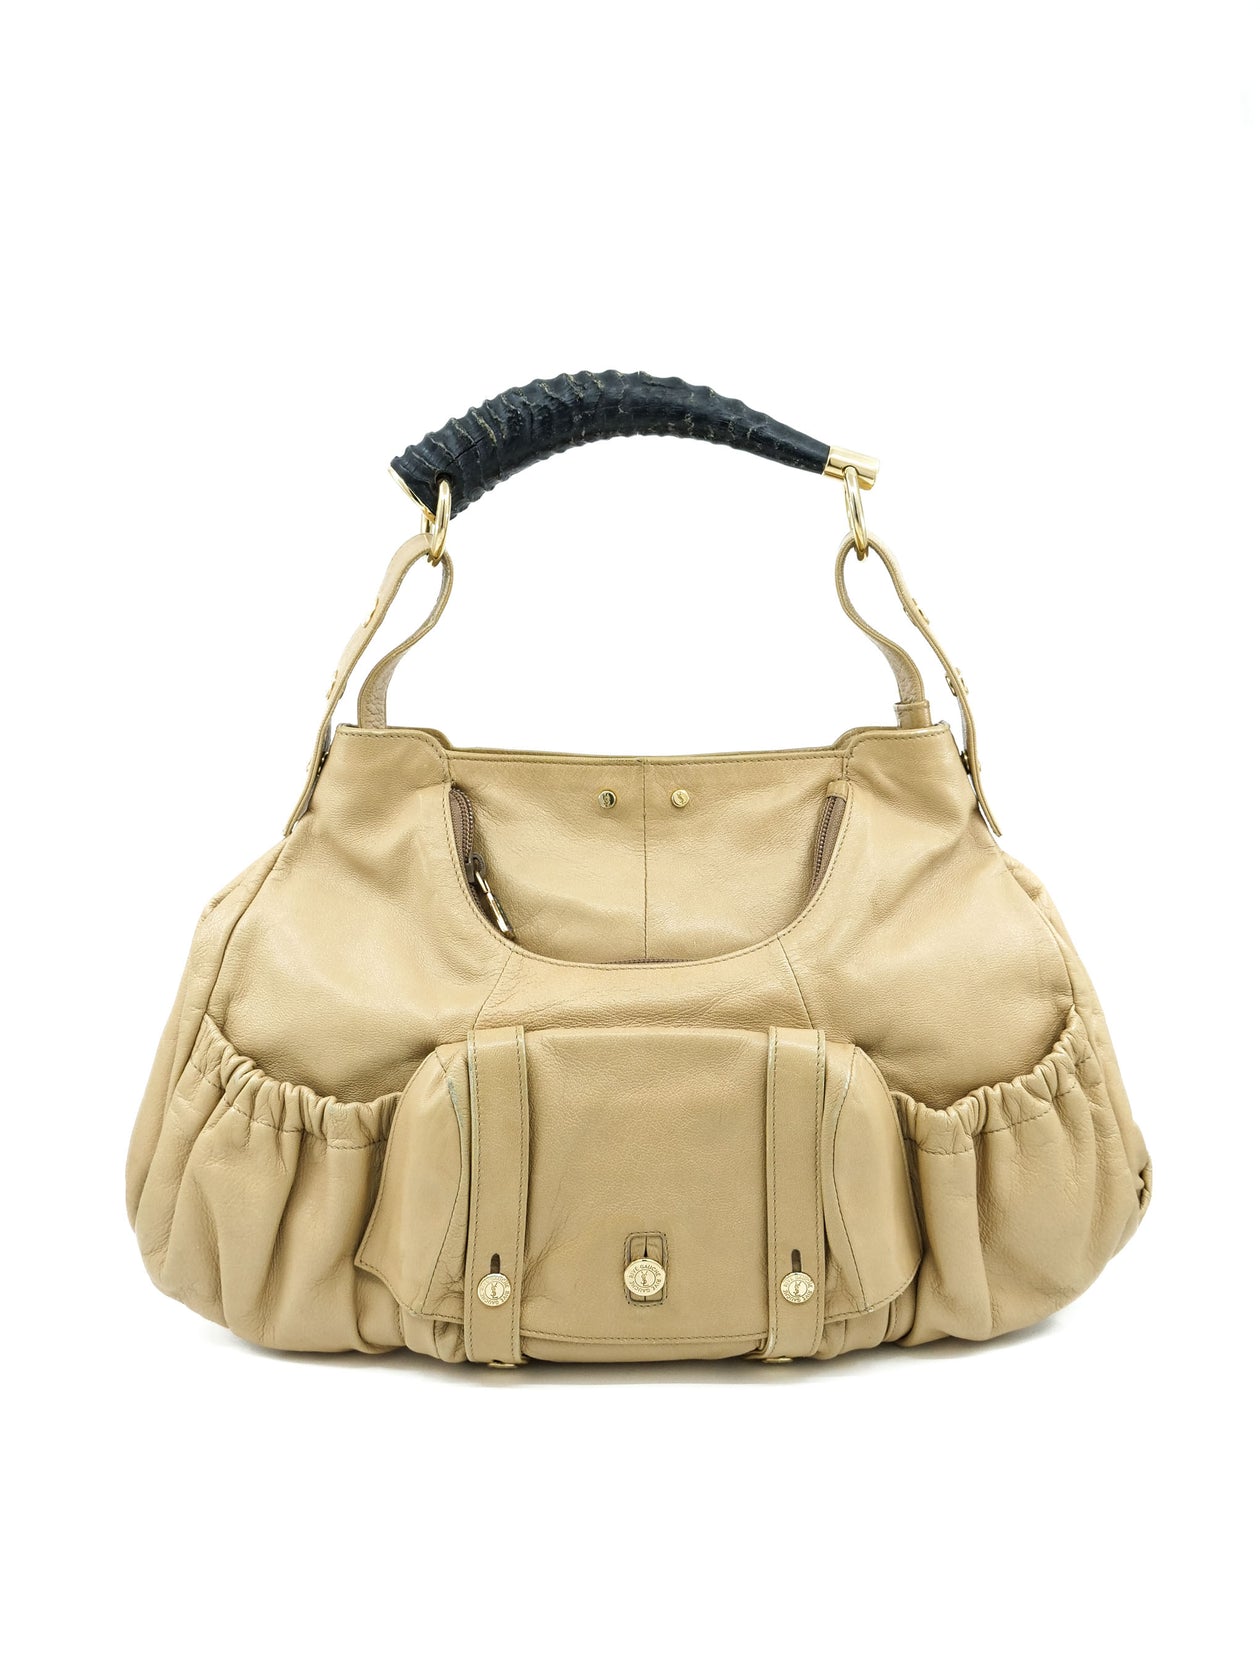 Yves Saint Laurent Mombasa Beige Leather Handbag